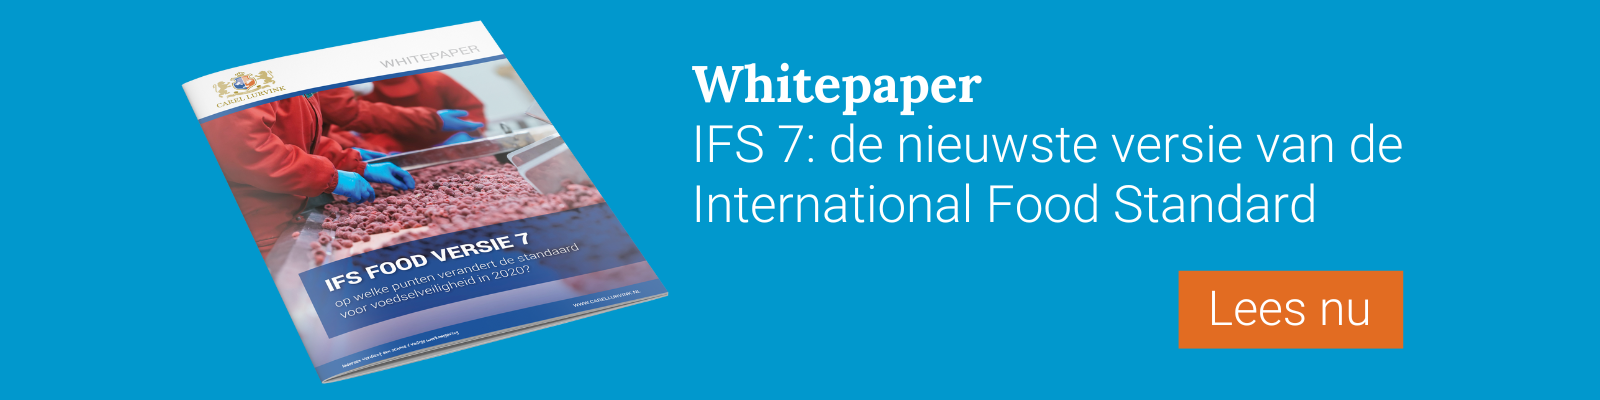 CTA Whitepaper IFS 7